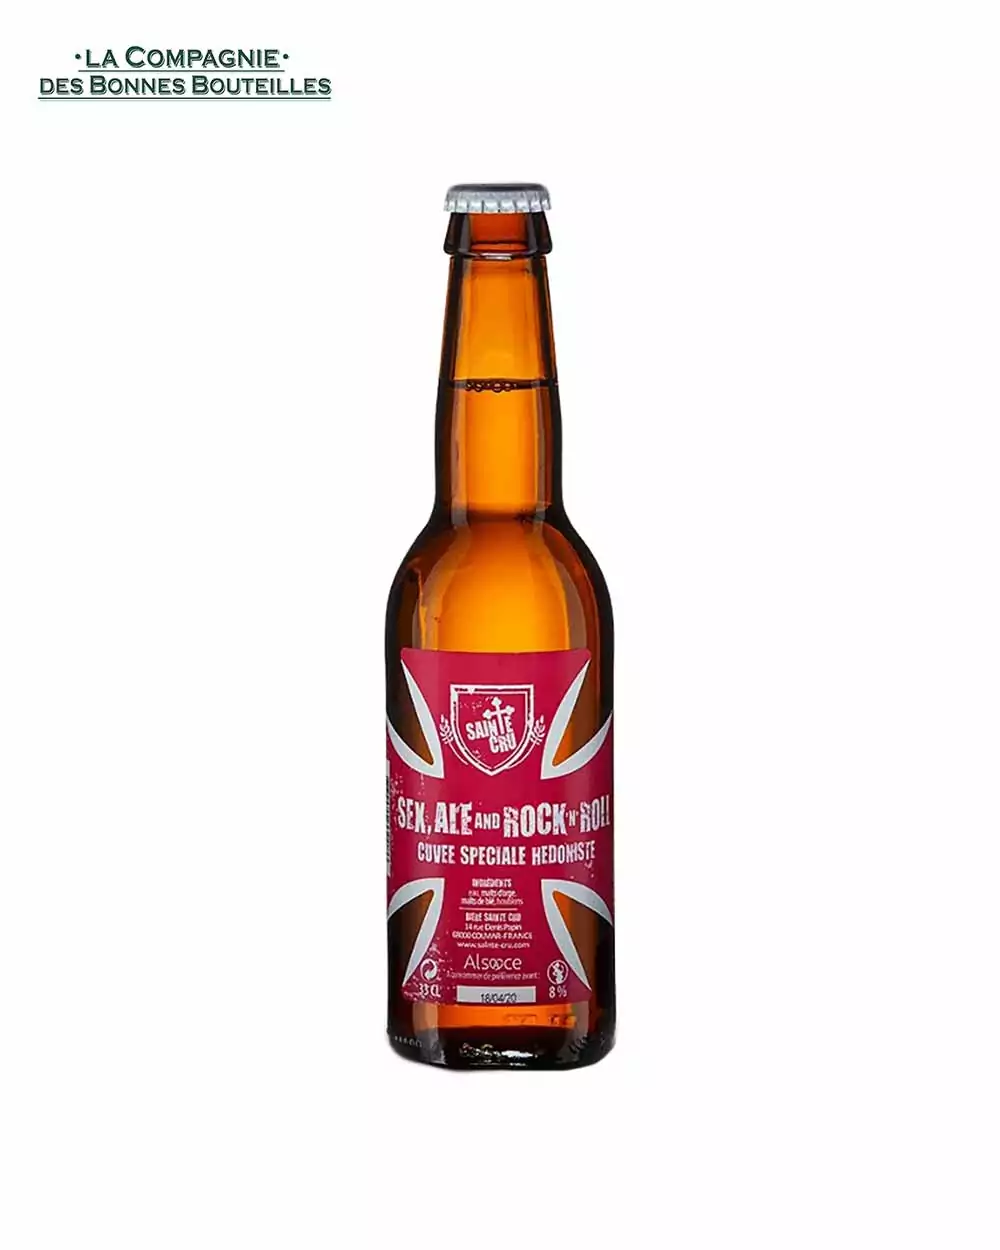 Bière sainte cru - Sex, ale & rock - double IPA - VP 33 cl